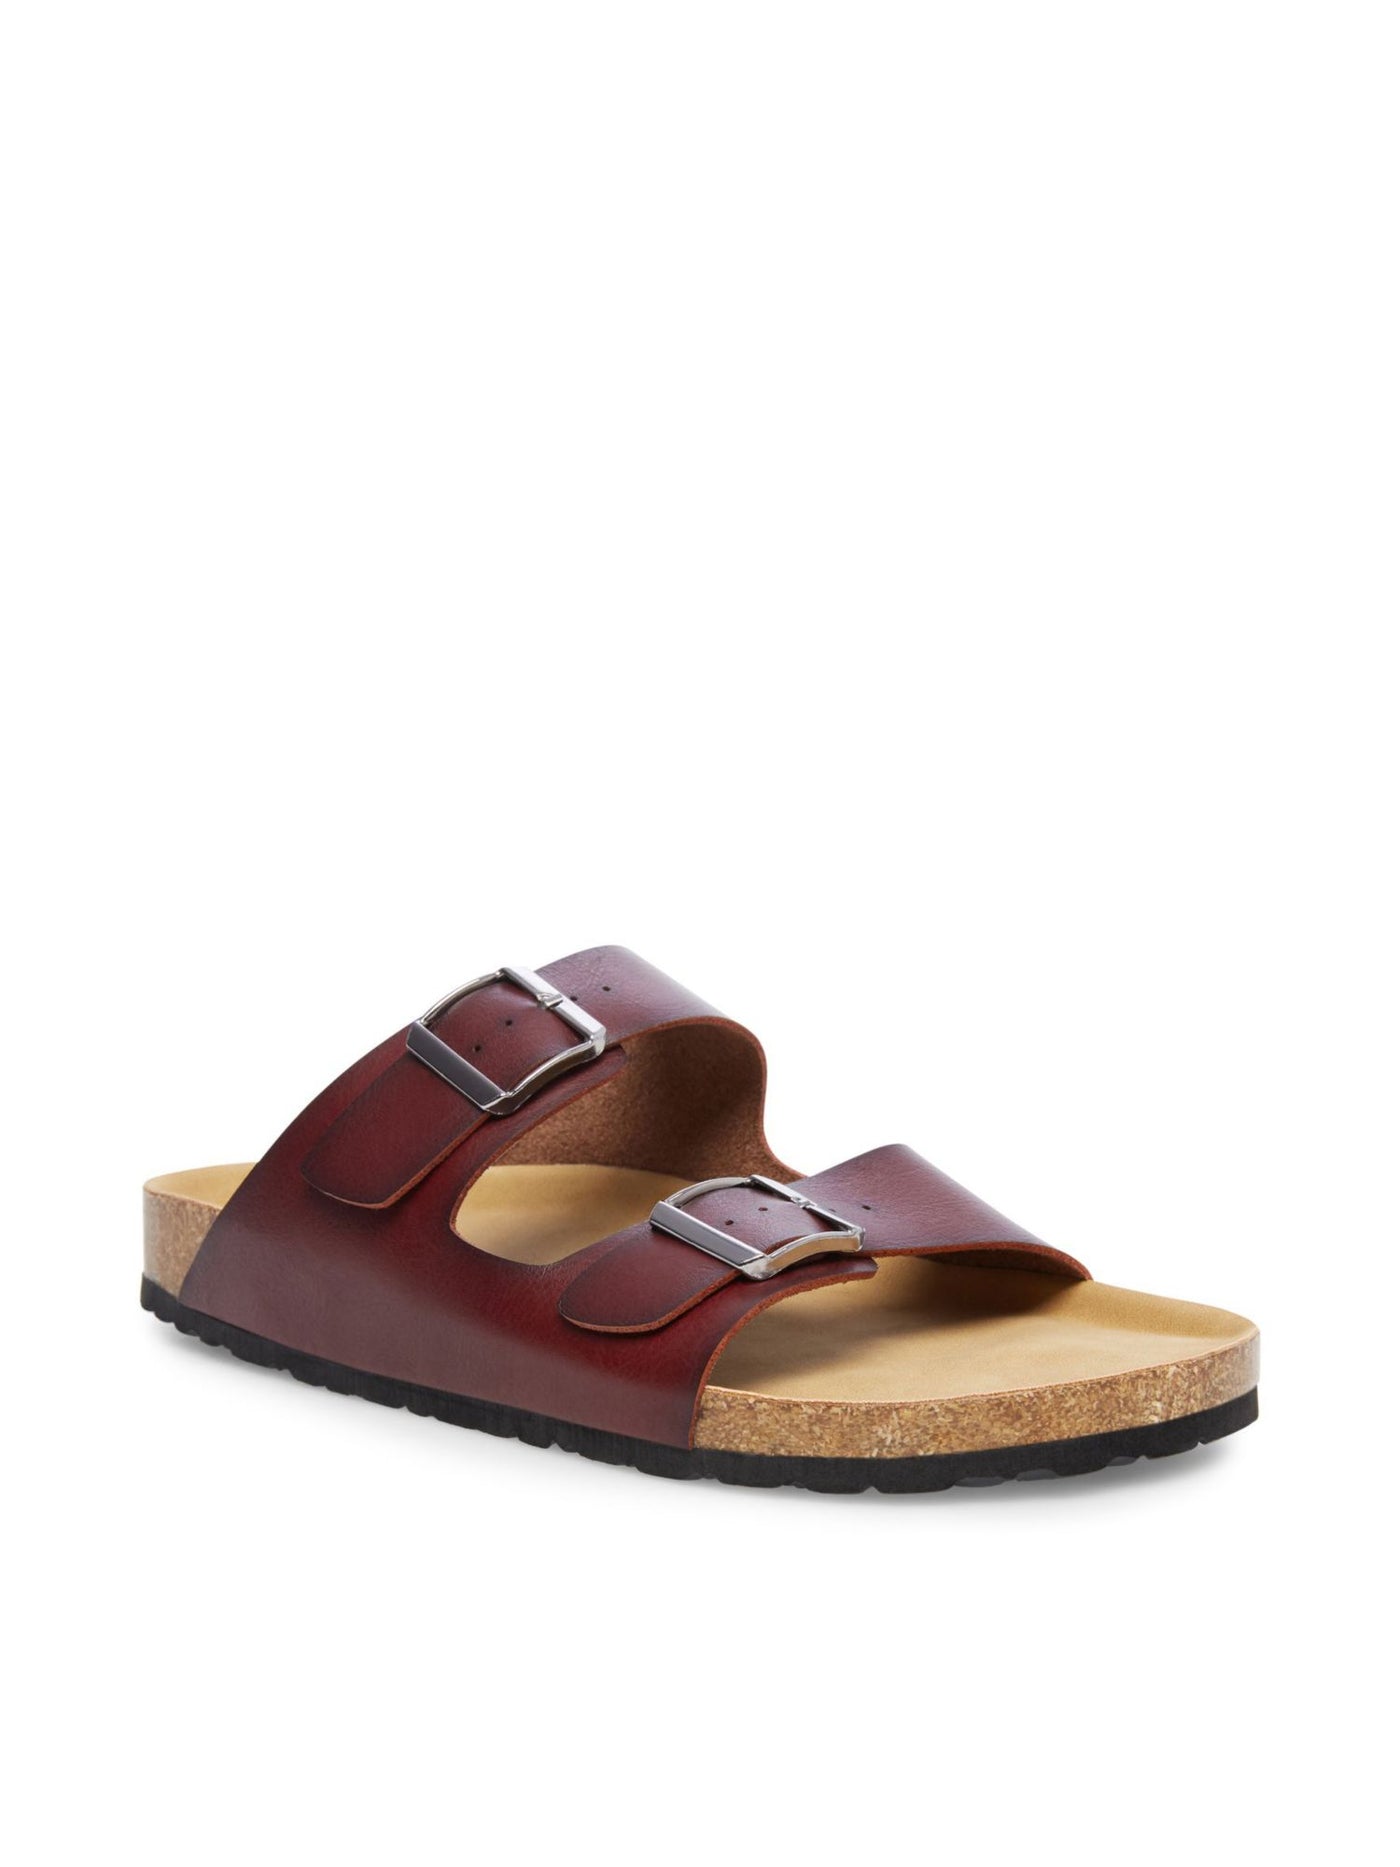 MADDEN Mens Brown Adjustable Padded Tafted Open Toe Buckle Slide Sandals Shoes 11 M